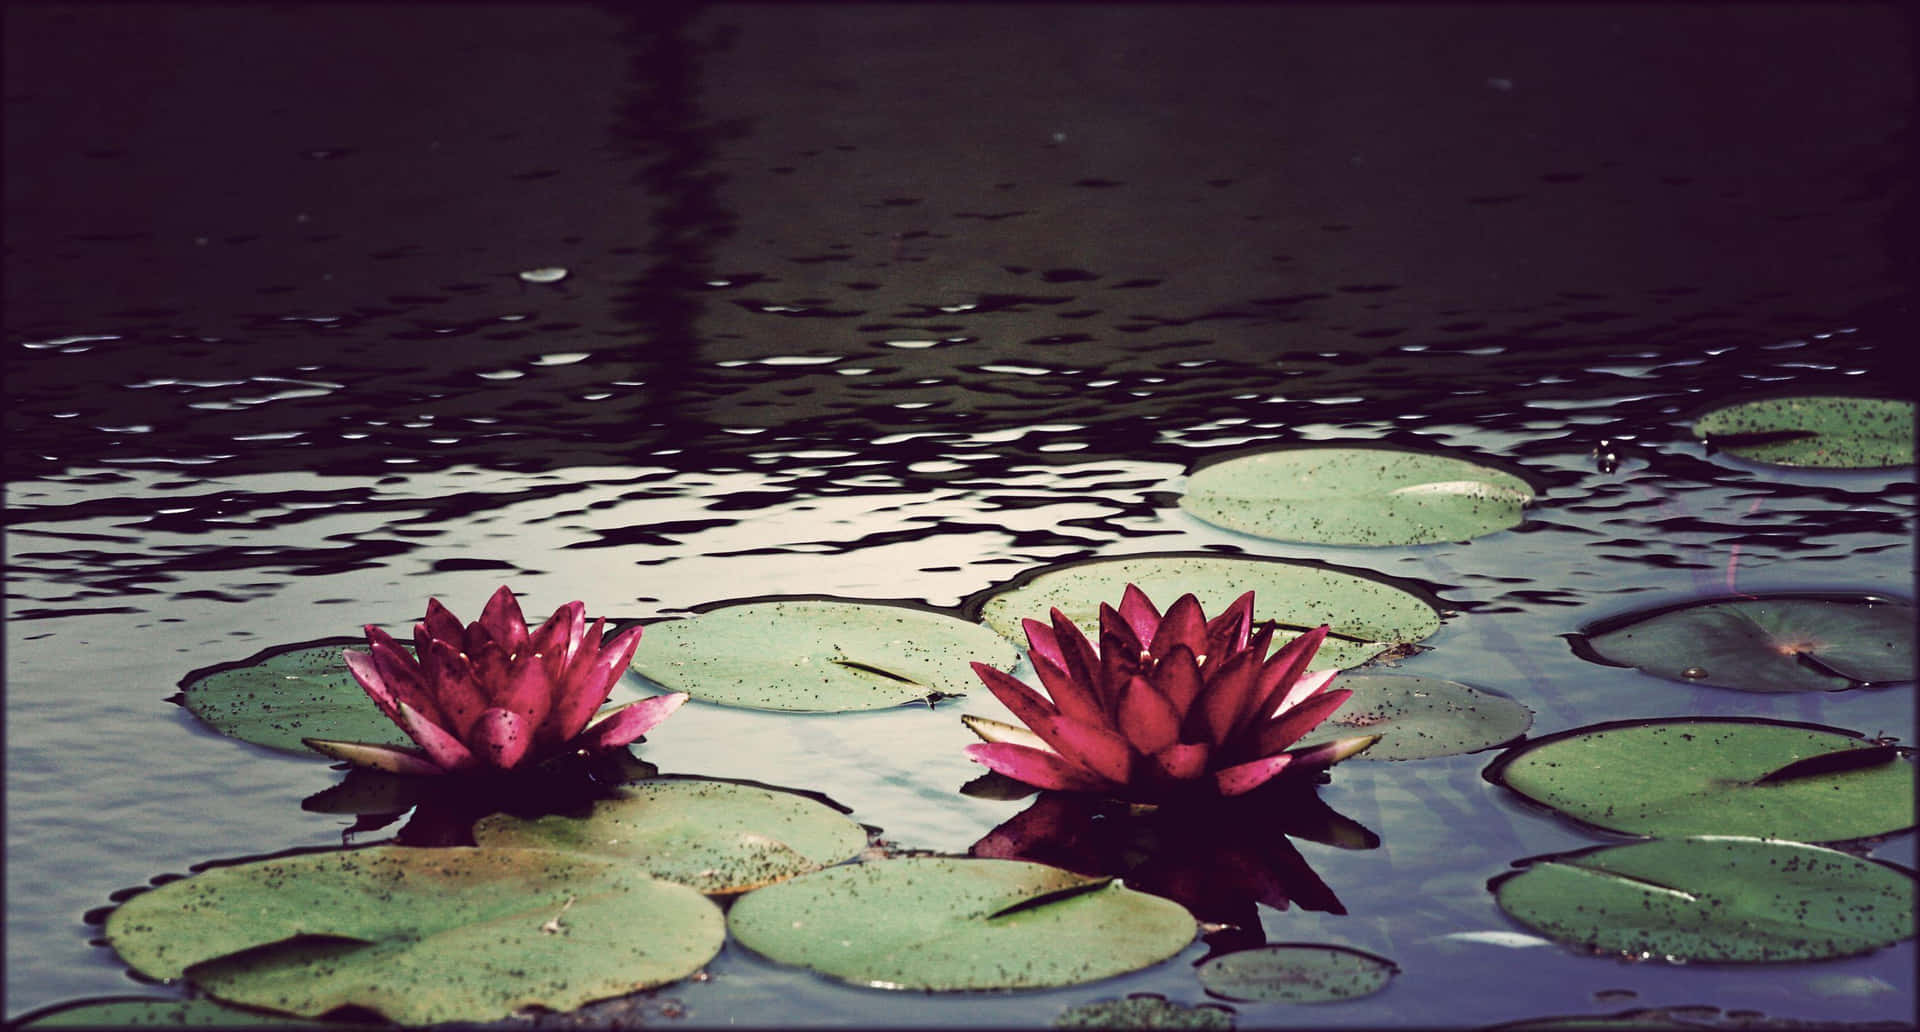 Reflecting Nature's Stillness - Enjoy the Tranquility of a Serene Pond